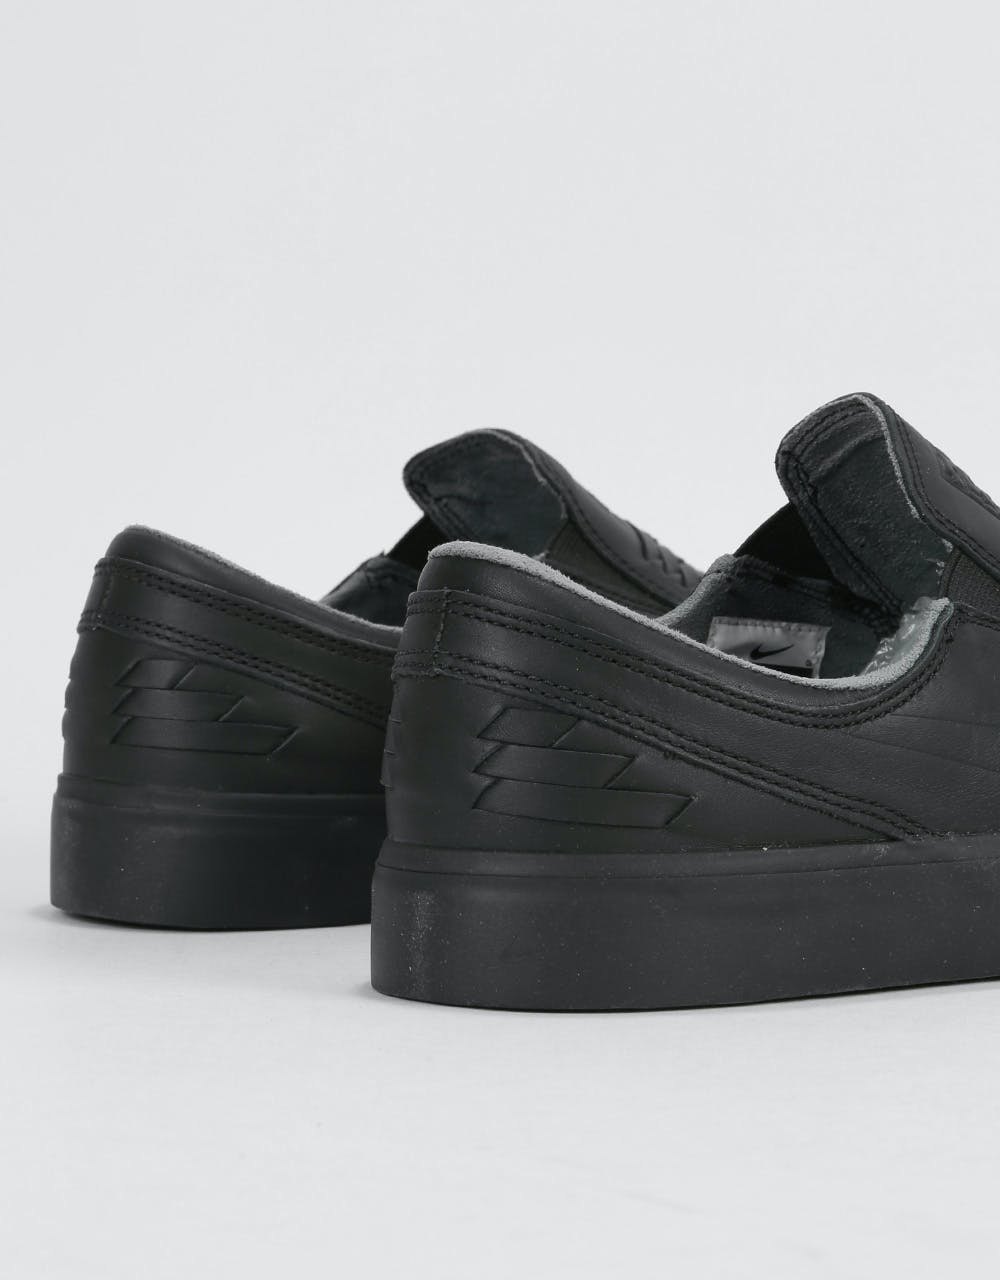 Nike SB Zoom Janoski Slip RM Crafted Skate Shoes - Black/Black-Black